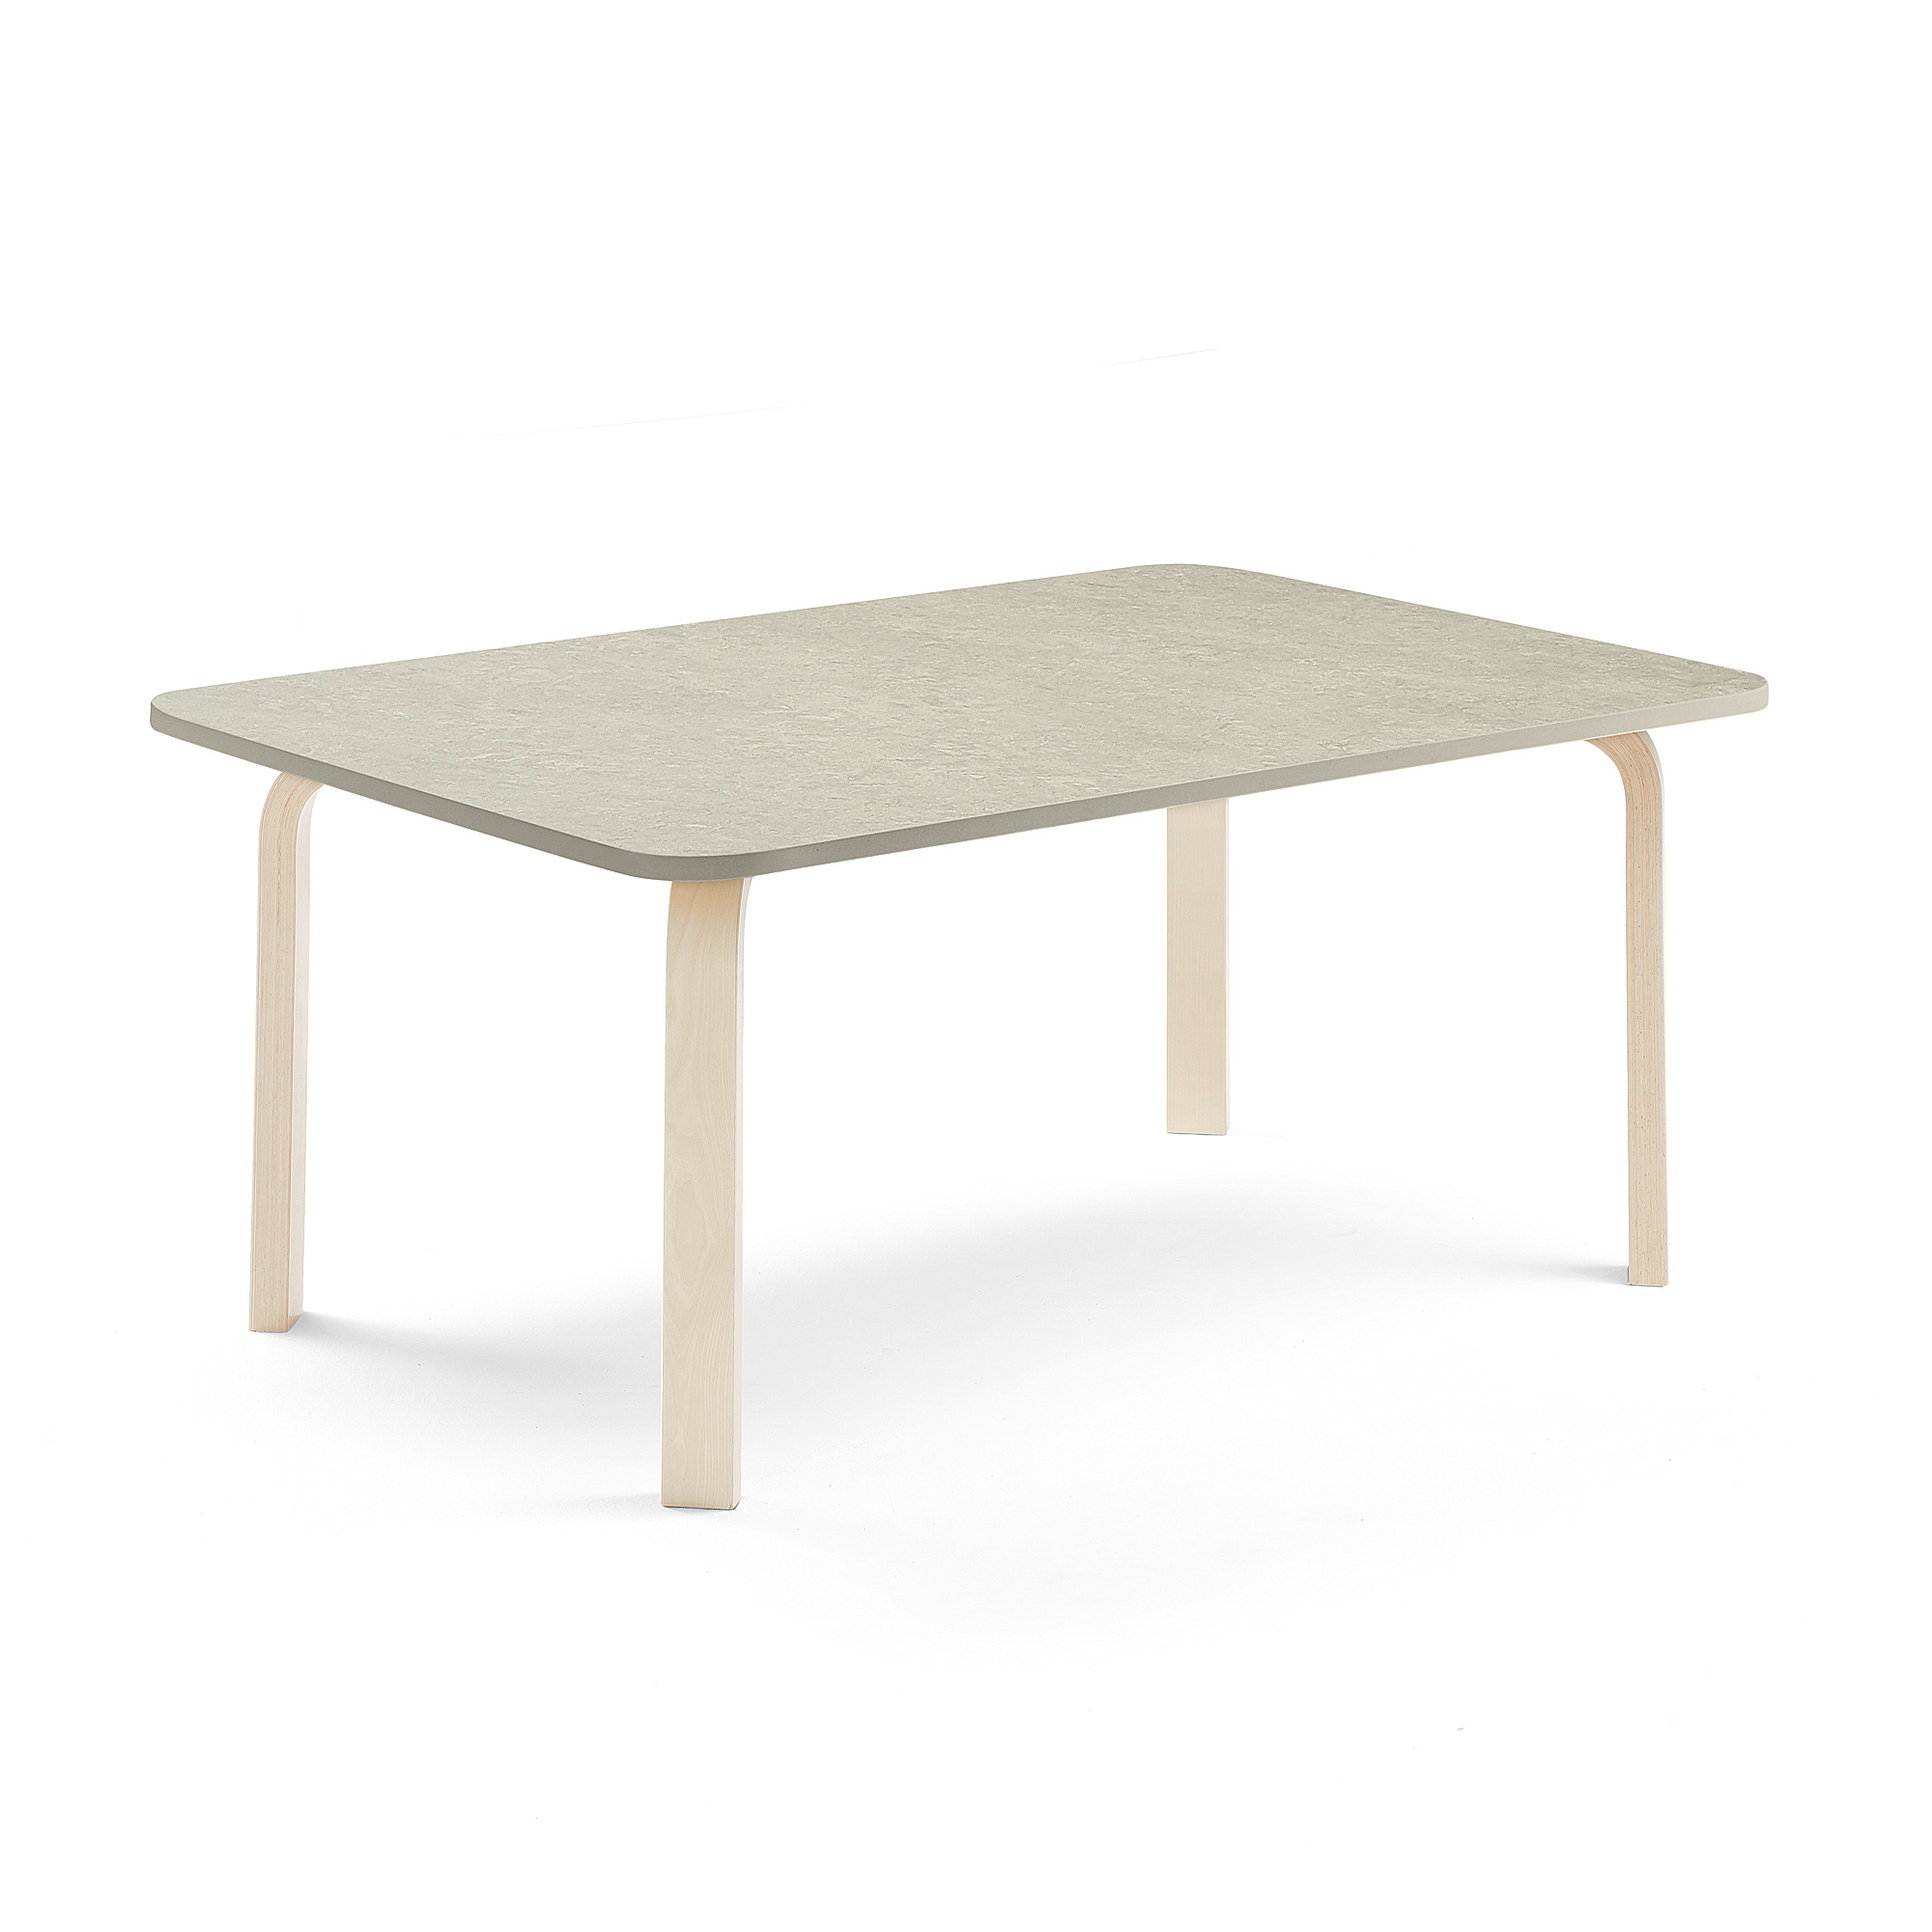 Stůl ELTON, 1400x700x530 mm, bříza, akustické linoleum, šedá